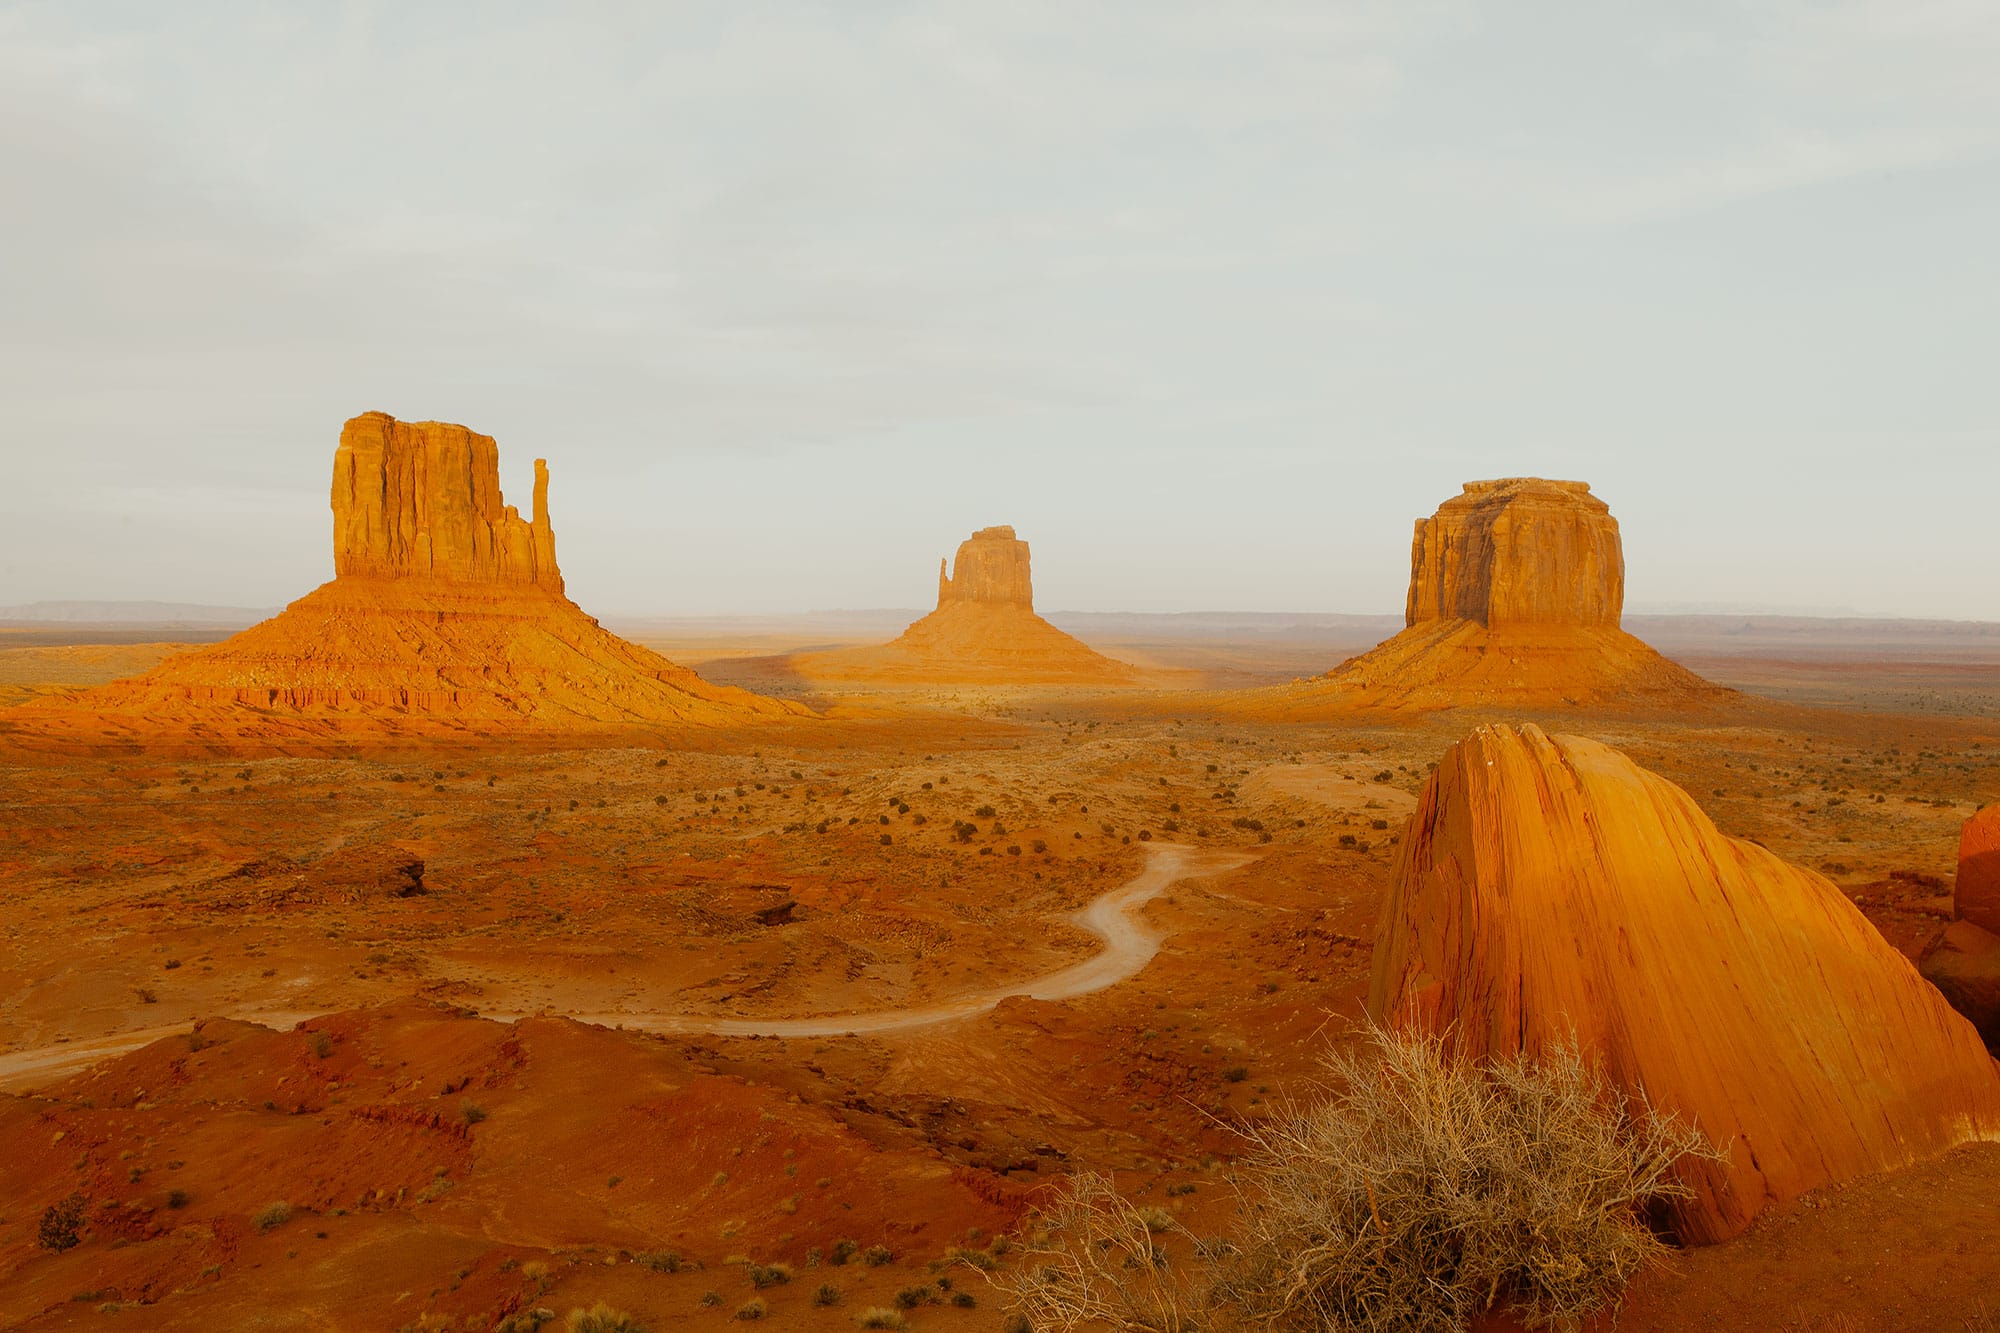 Navajo Nation